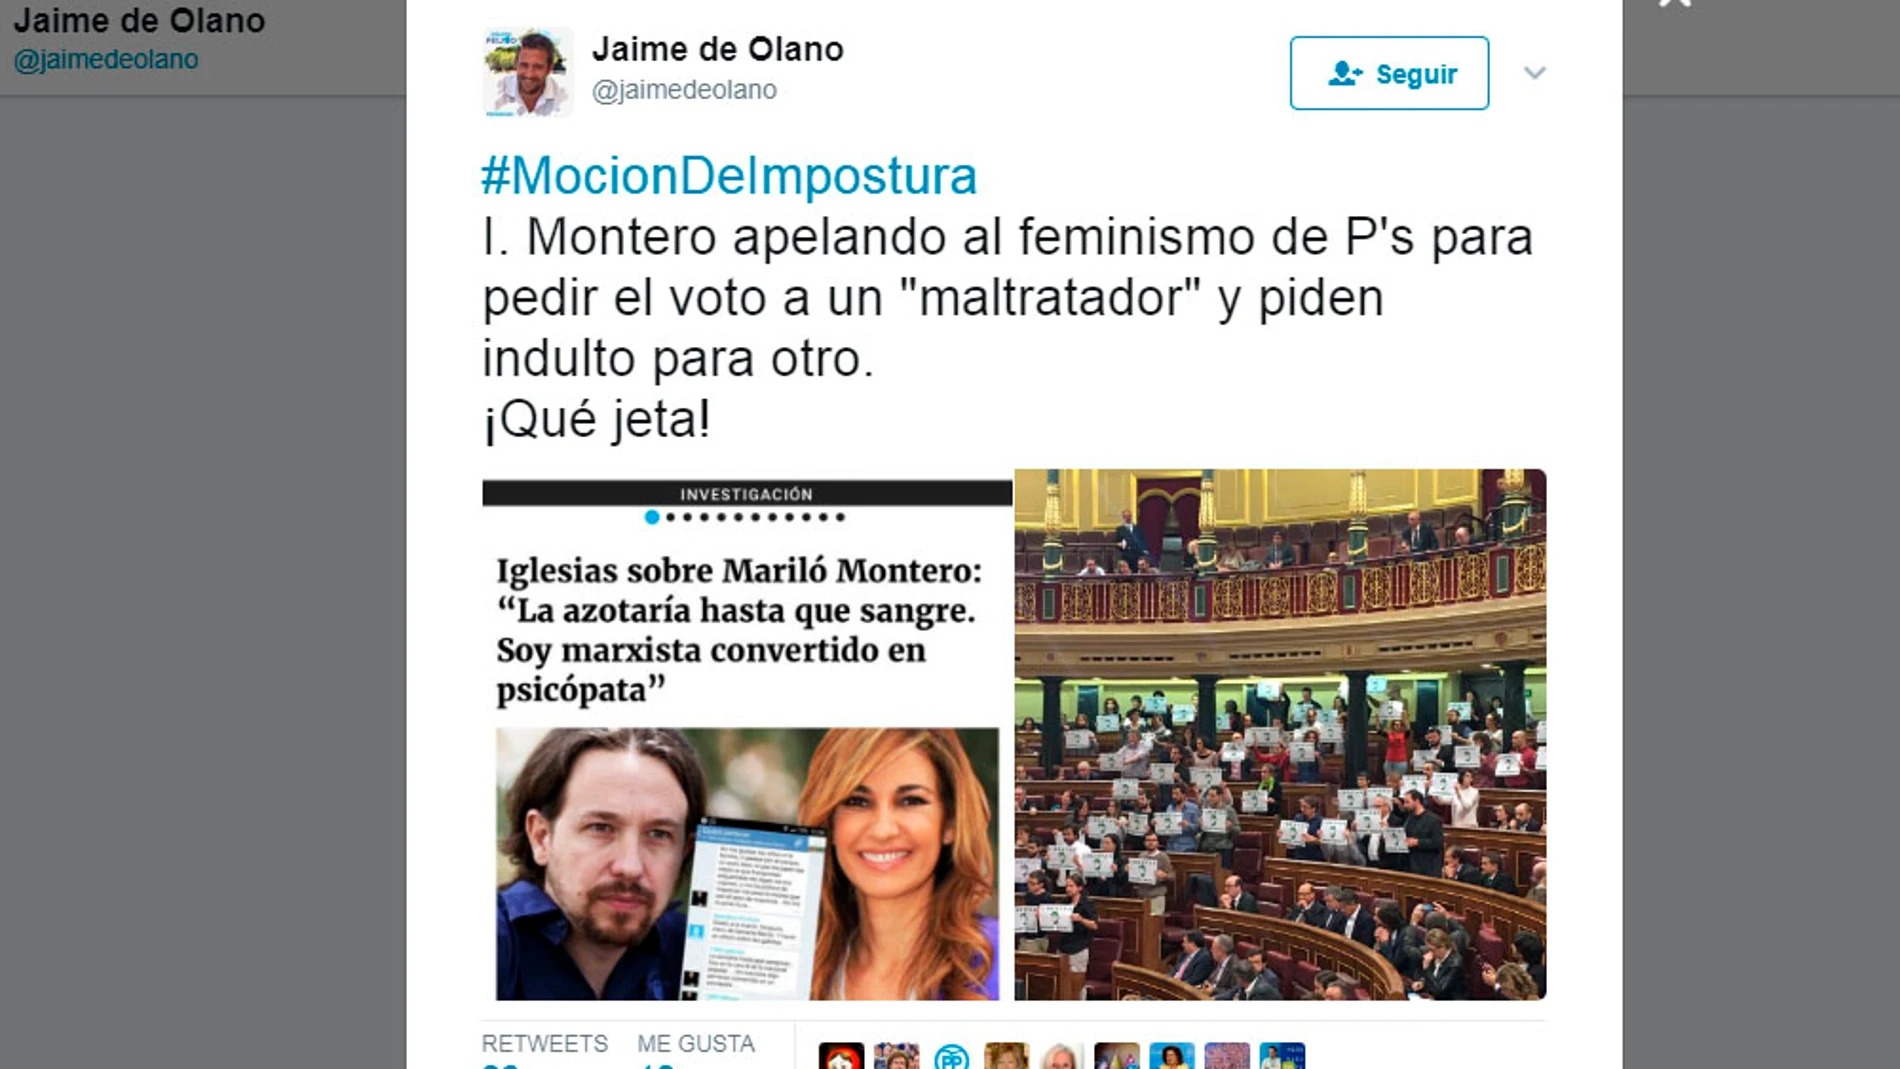 El polémico tuit del diputado Jaime Olano sobre Pablo Iglesias